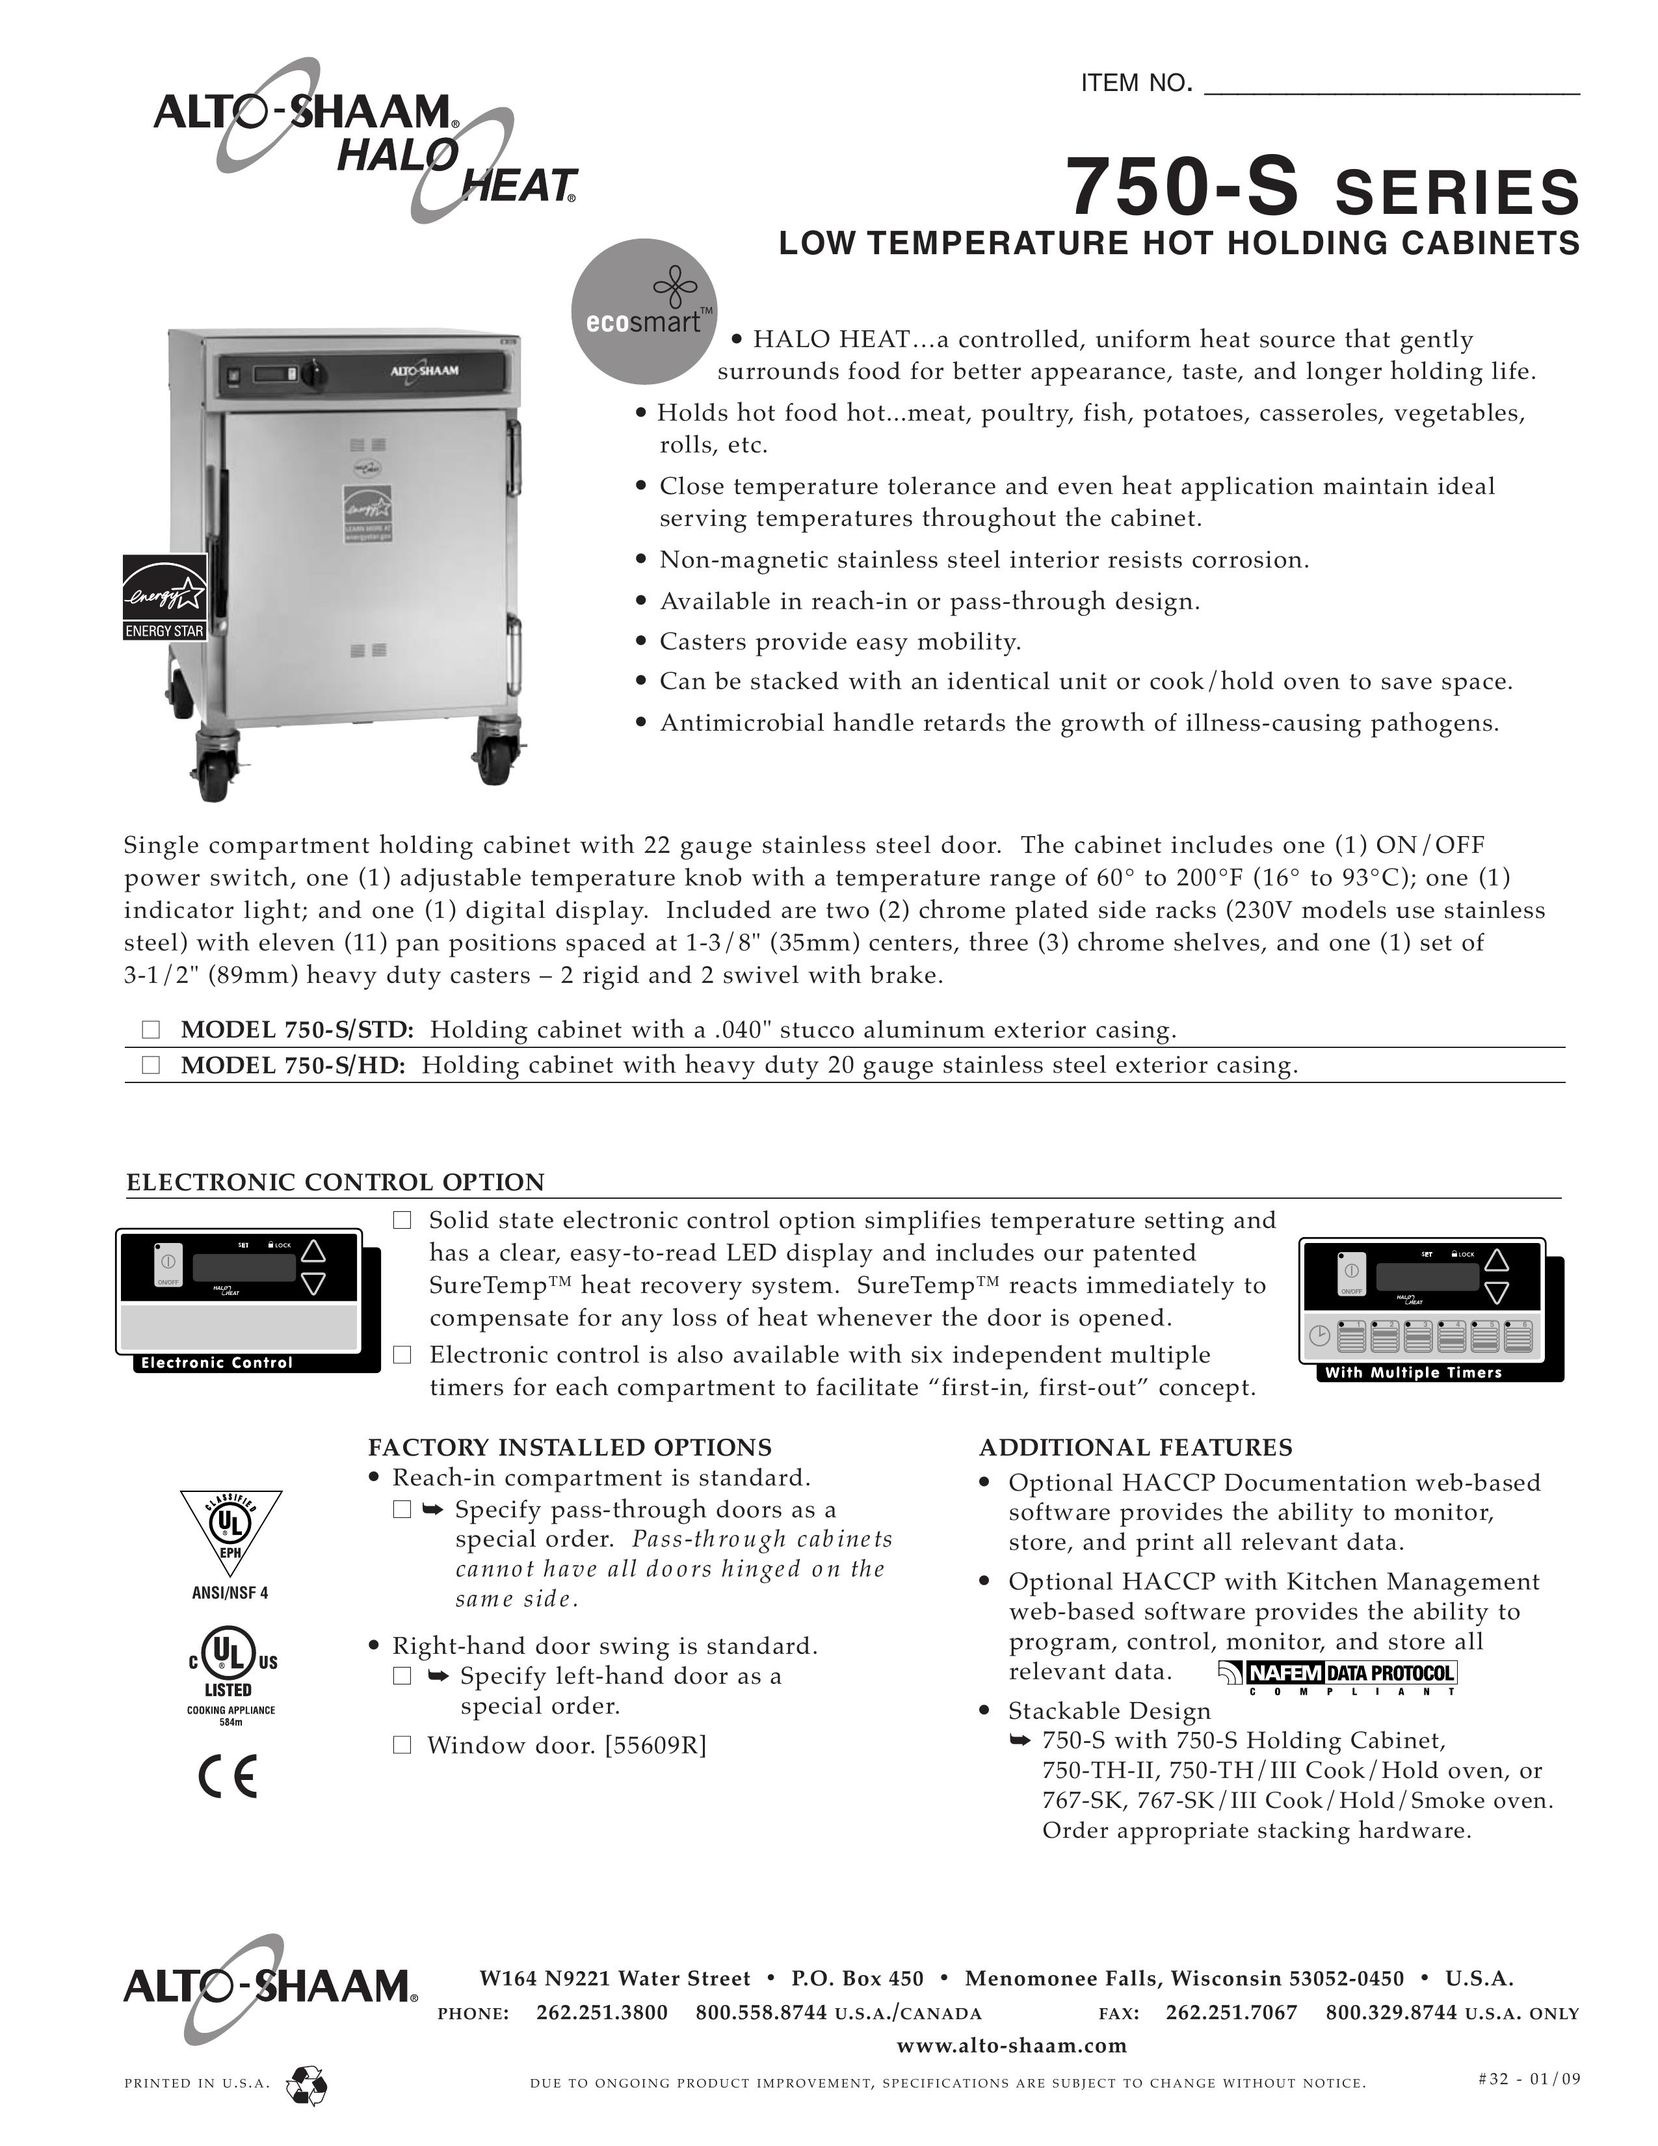 Alto-Shaam 750-S SERIES Kitchen Entertainment Center User Manual